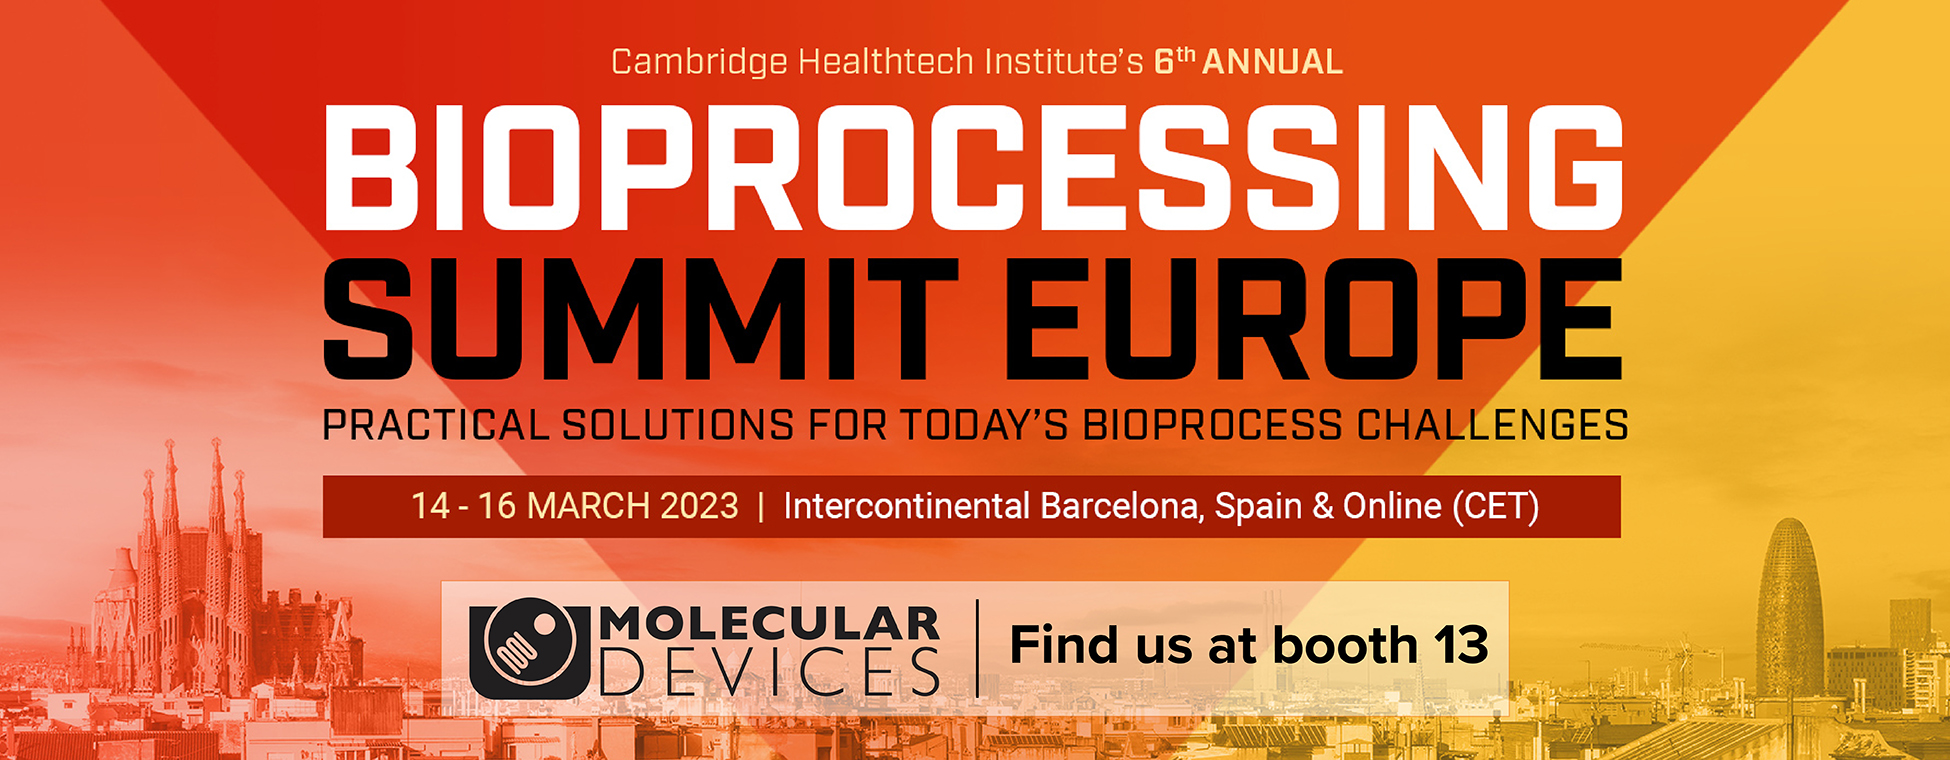 Banner-LP-BioProcessing Summit Europe-20230203